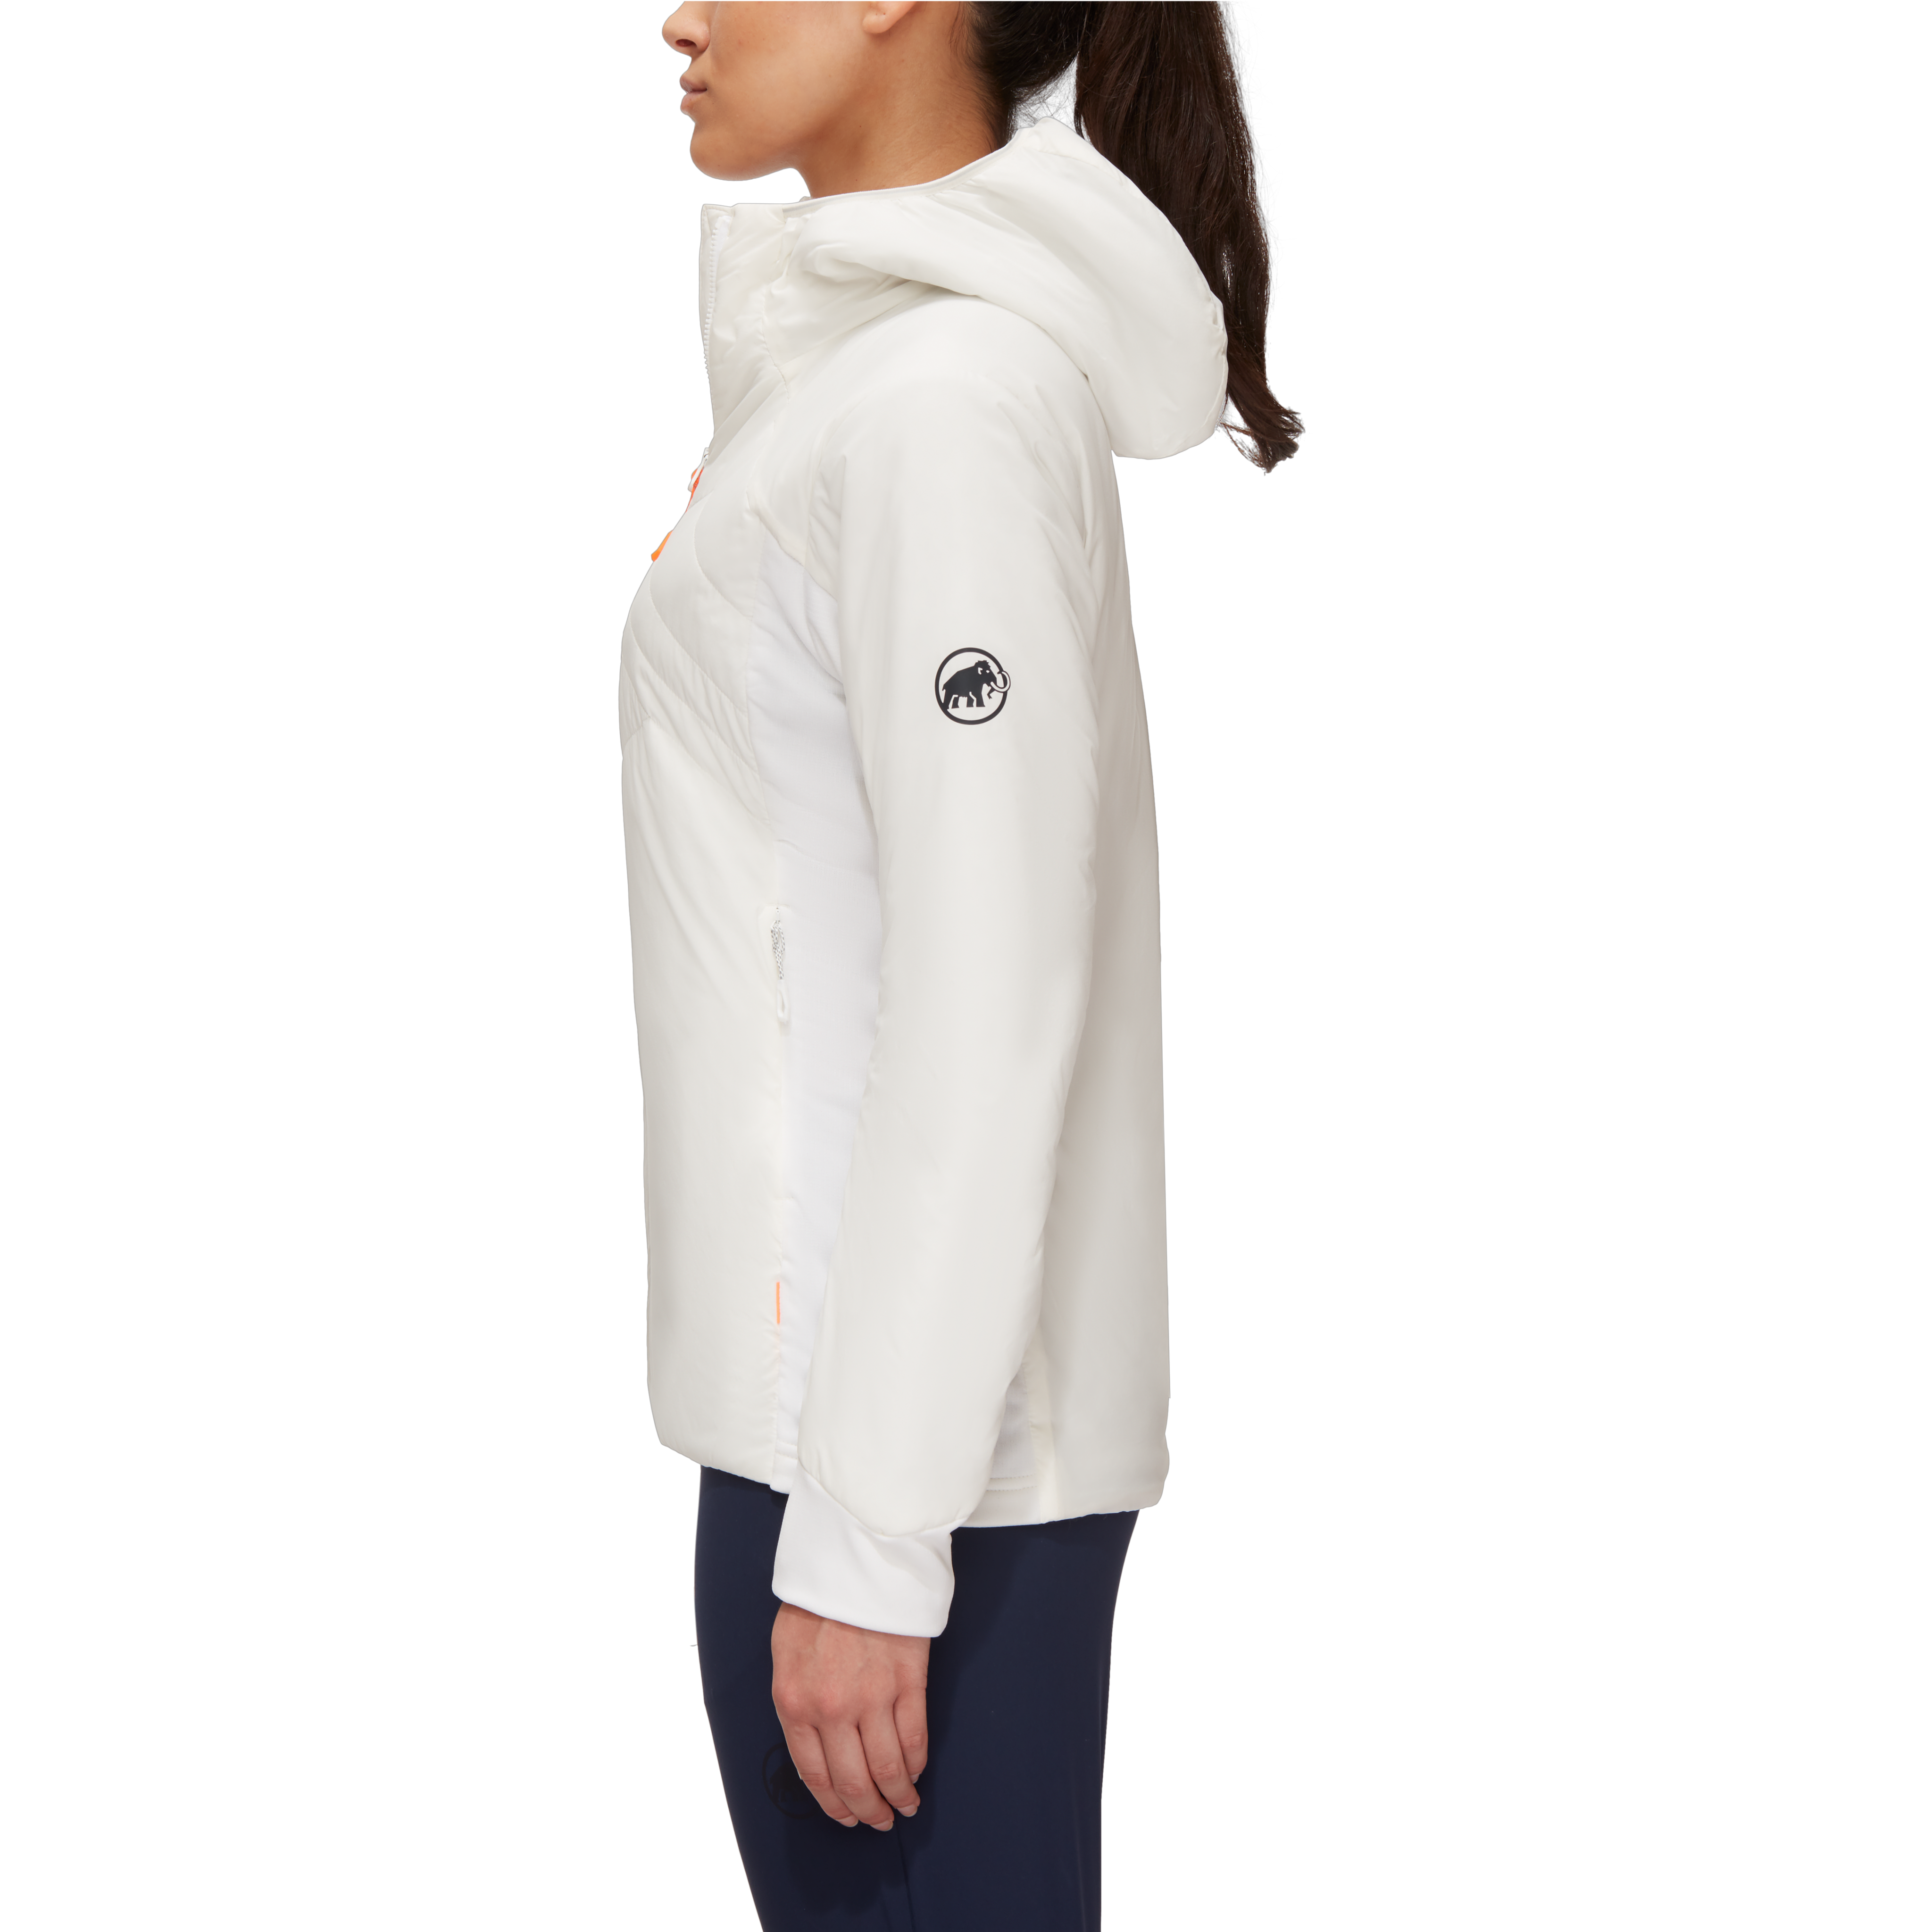 Rime Light IN Flex Hooded Jacket Women product image